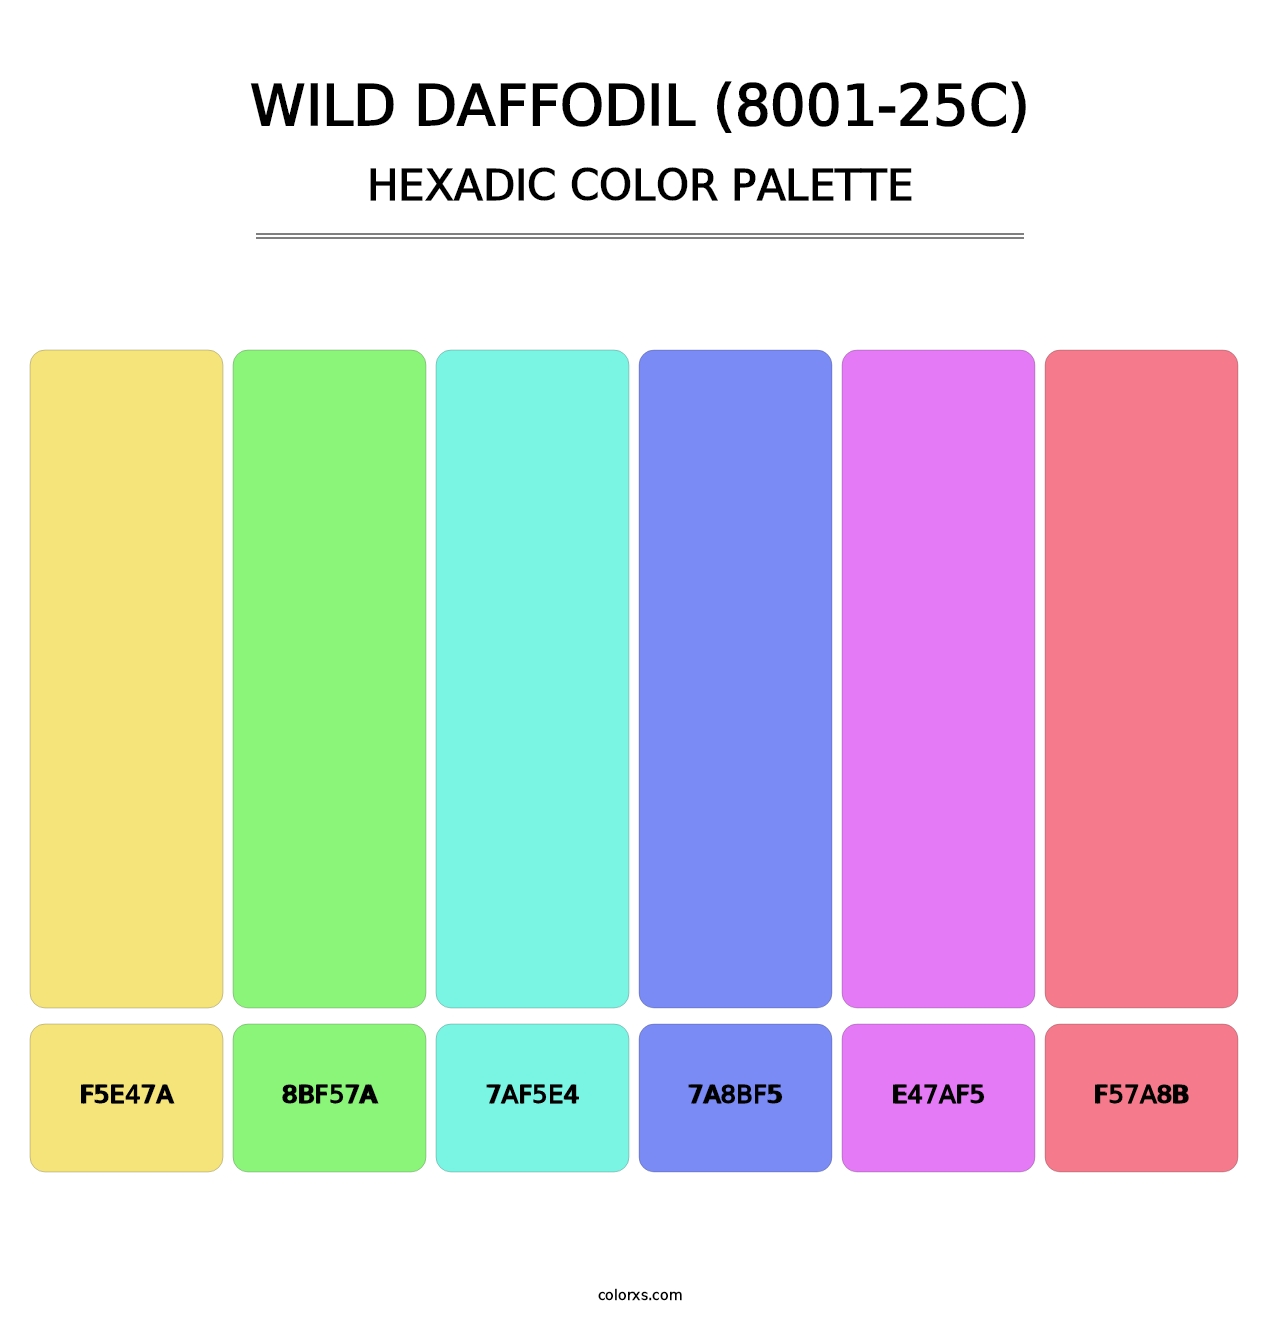 Wild Daffodil (8001-25C) - Hexadic Color Palette